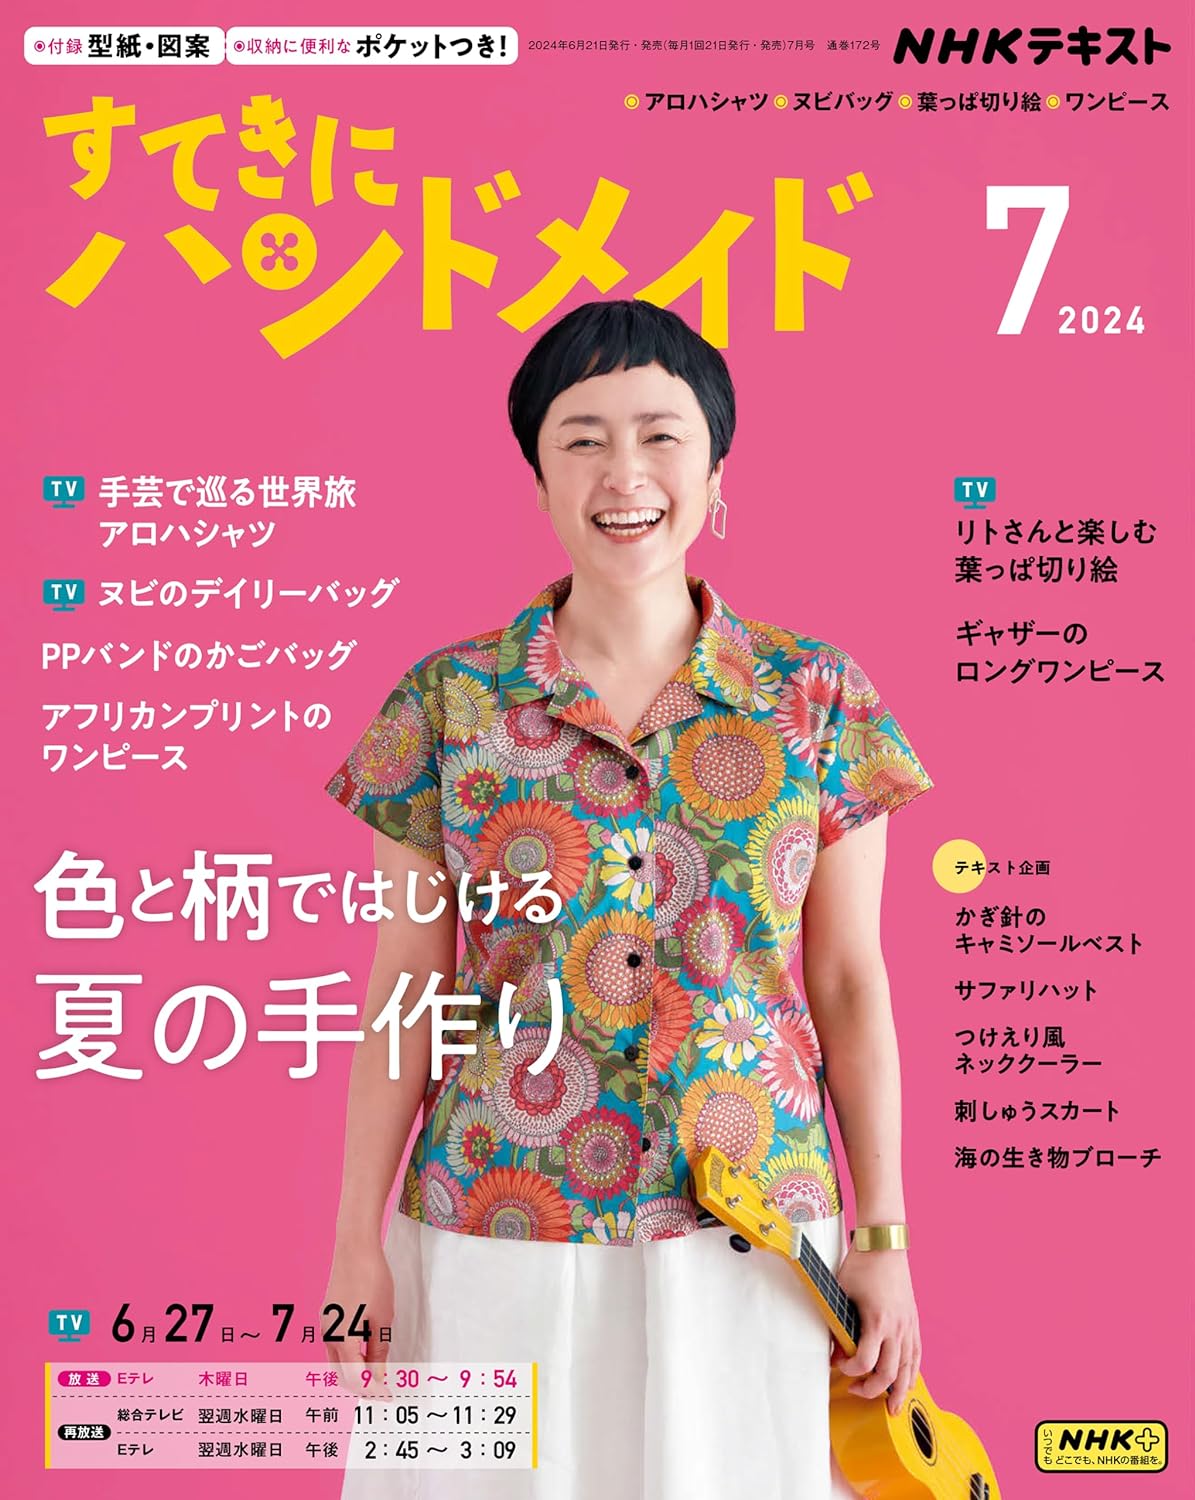 NHK67074 Sutekini Handmade, July 2024 issue(book)